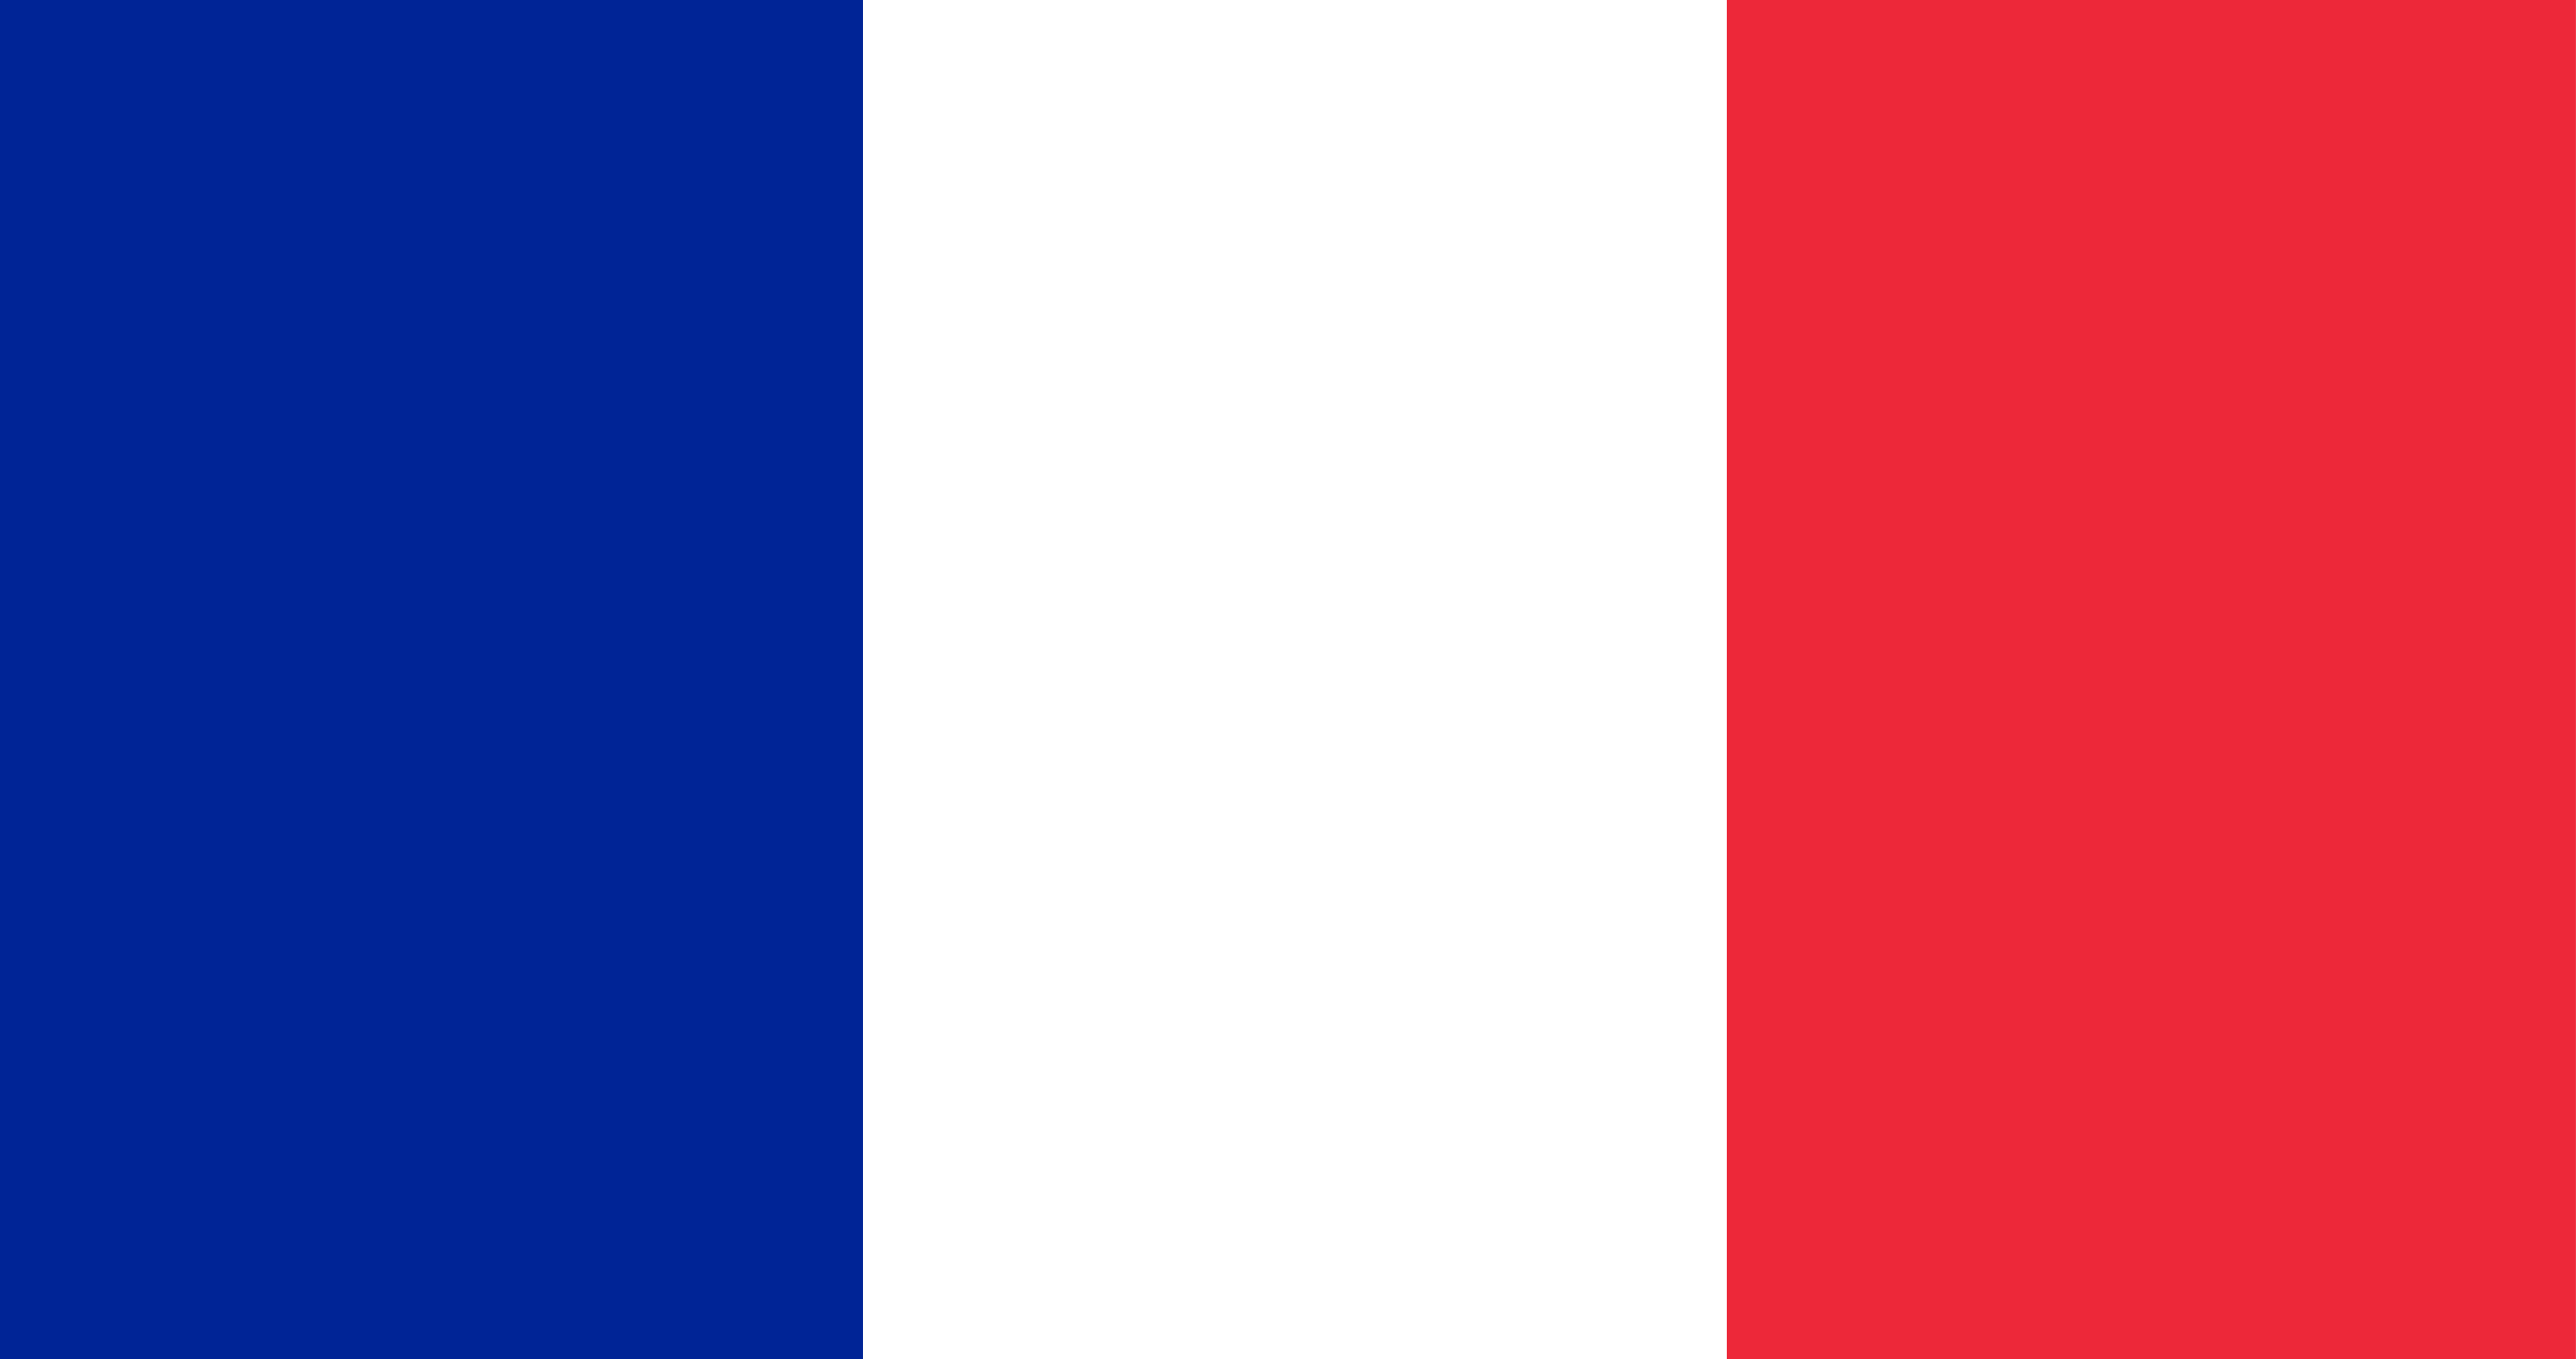 Illustration of France flag - Download Free Vectors, Clipart Graphics